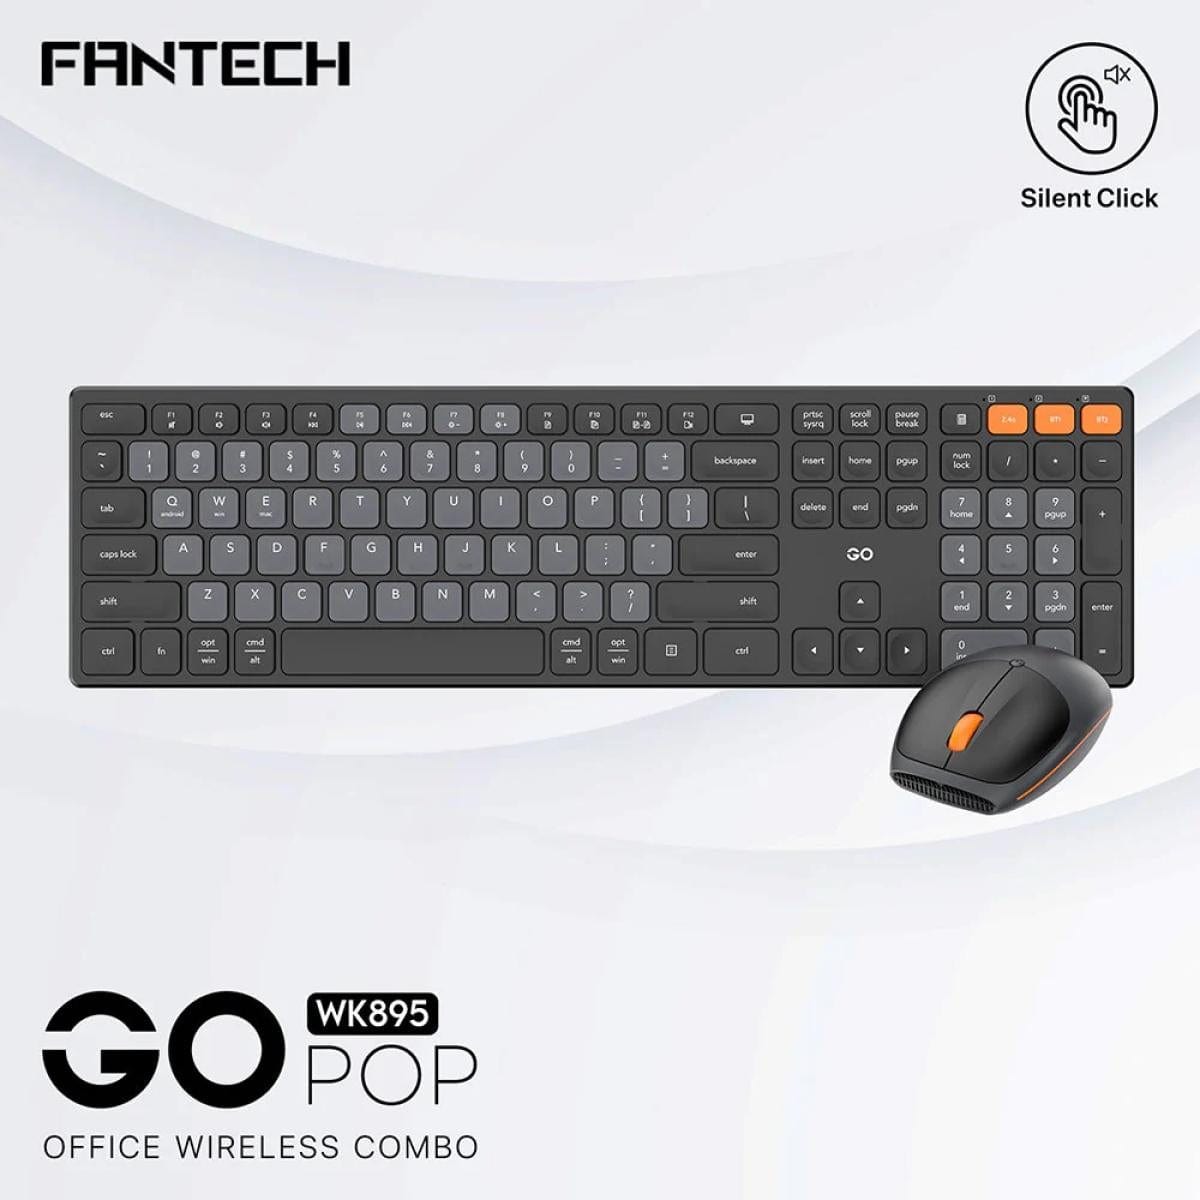 FANTECH Keyboard Black Fantech GO POP WK895 Kit Office Combo keyboard and mouse Wireless Dual Mode  Silent Switches & Multimedia Function Keys (Gray + Black + beige + Blue ) For Mac & Win